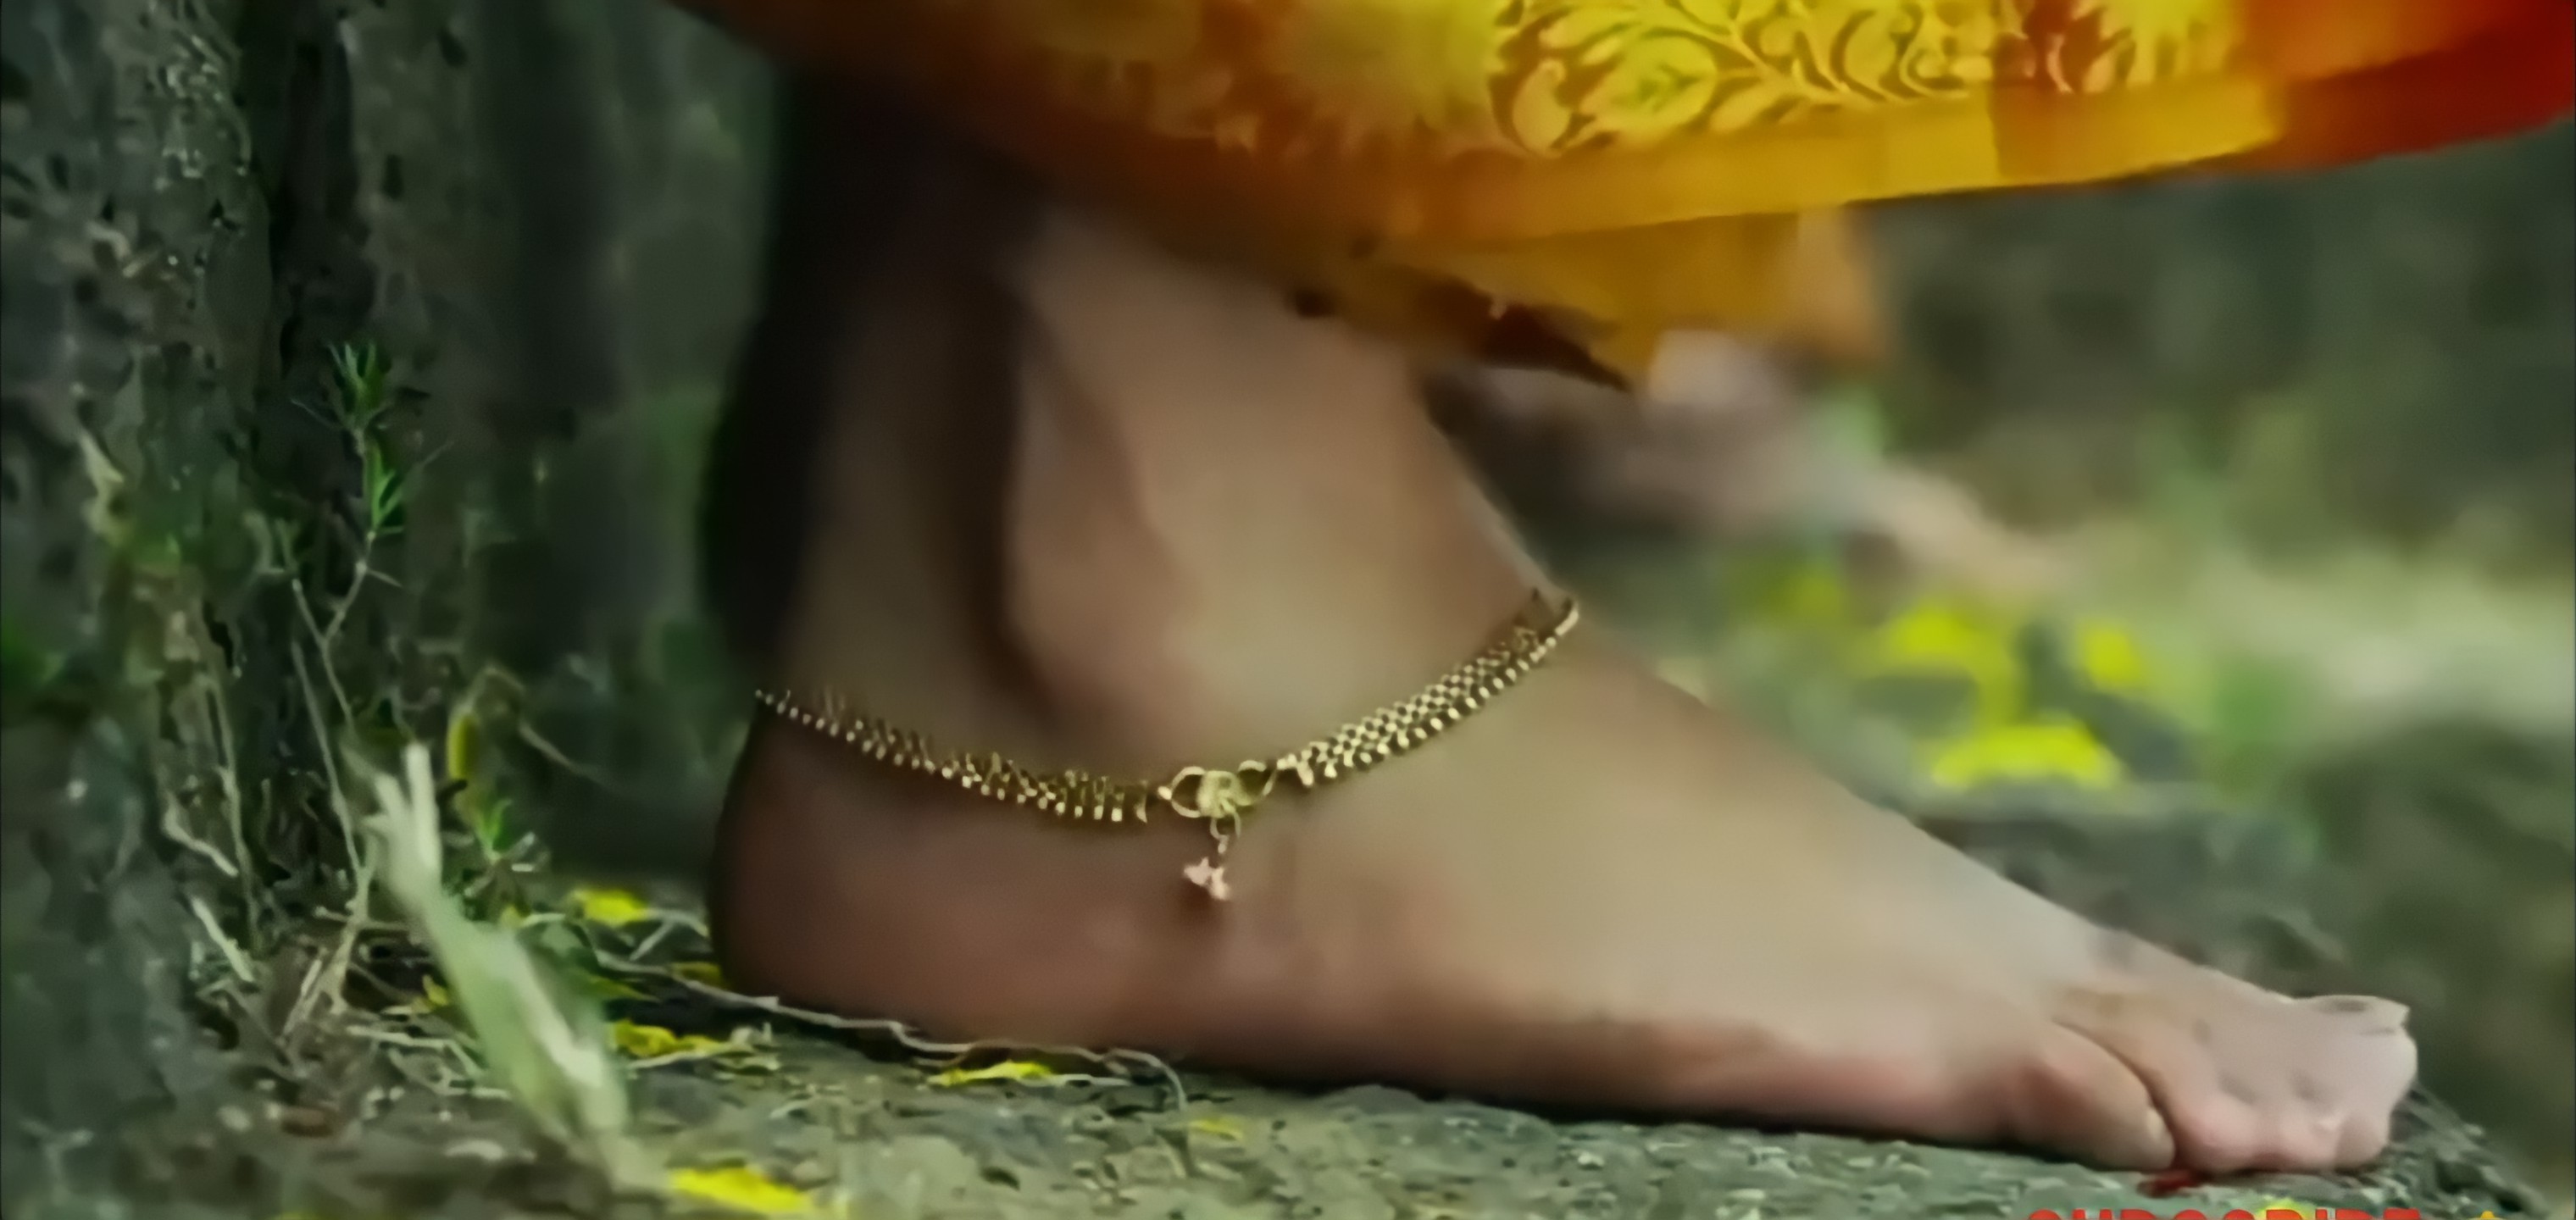 Anushka Shetty's Feet << wikiFeet